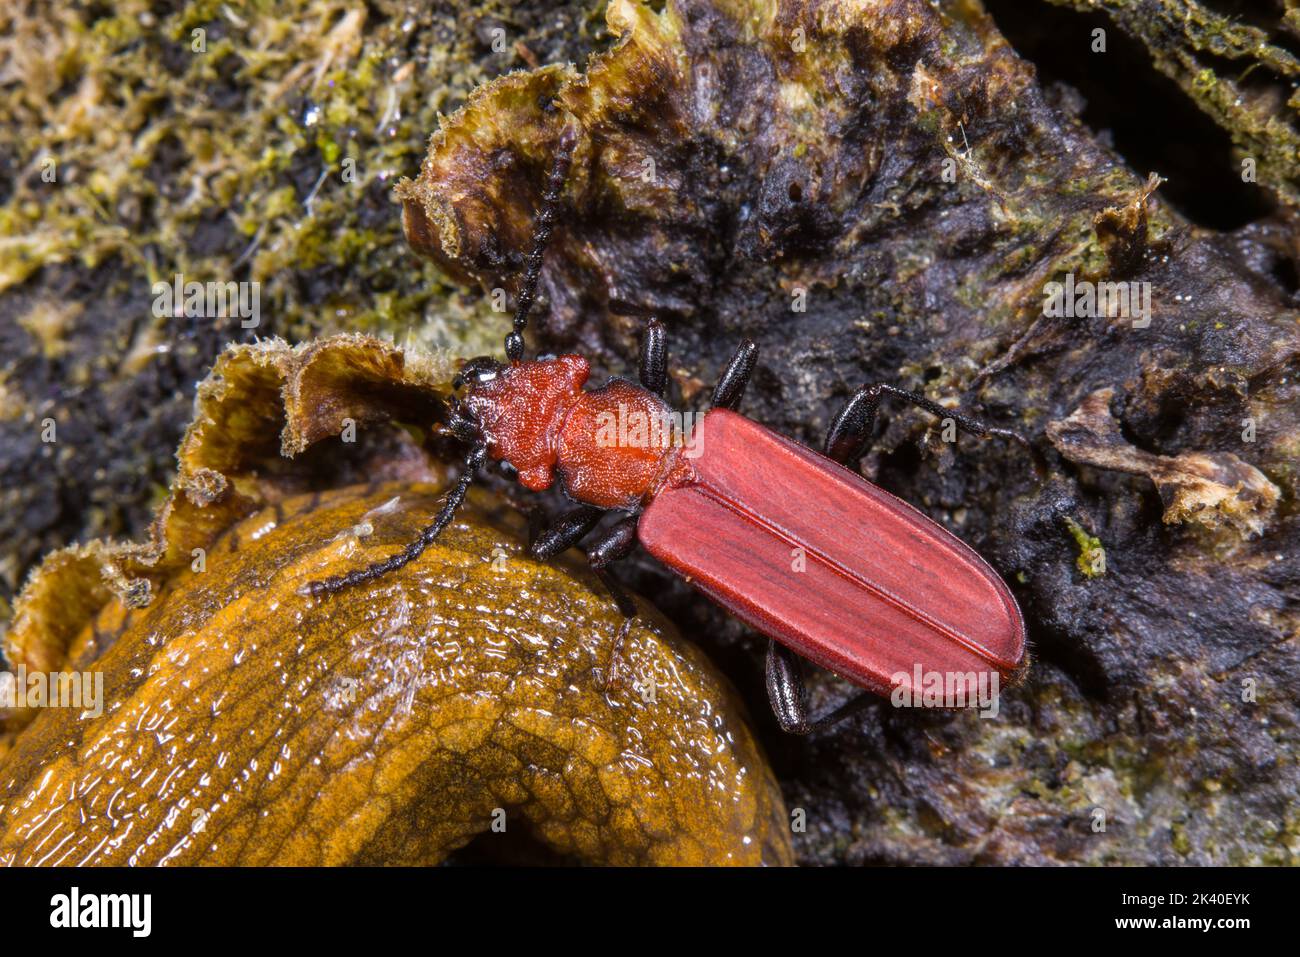 Cinnabar flat bark beetle (Cucujus cinnaberinus), on the ground next to a slug, Germany Stock Photo